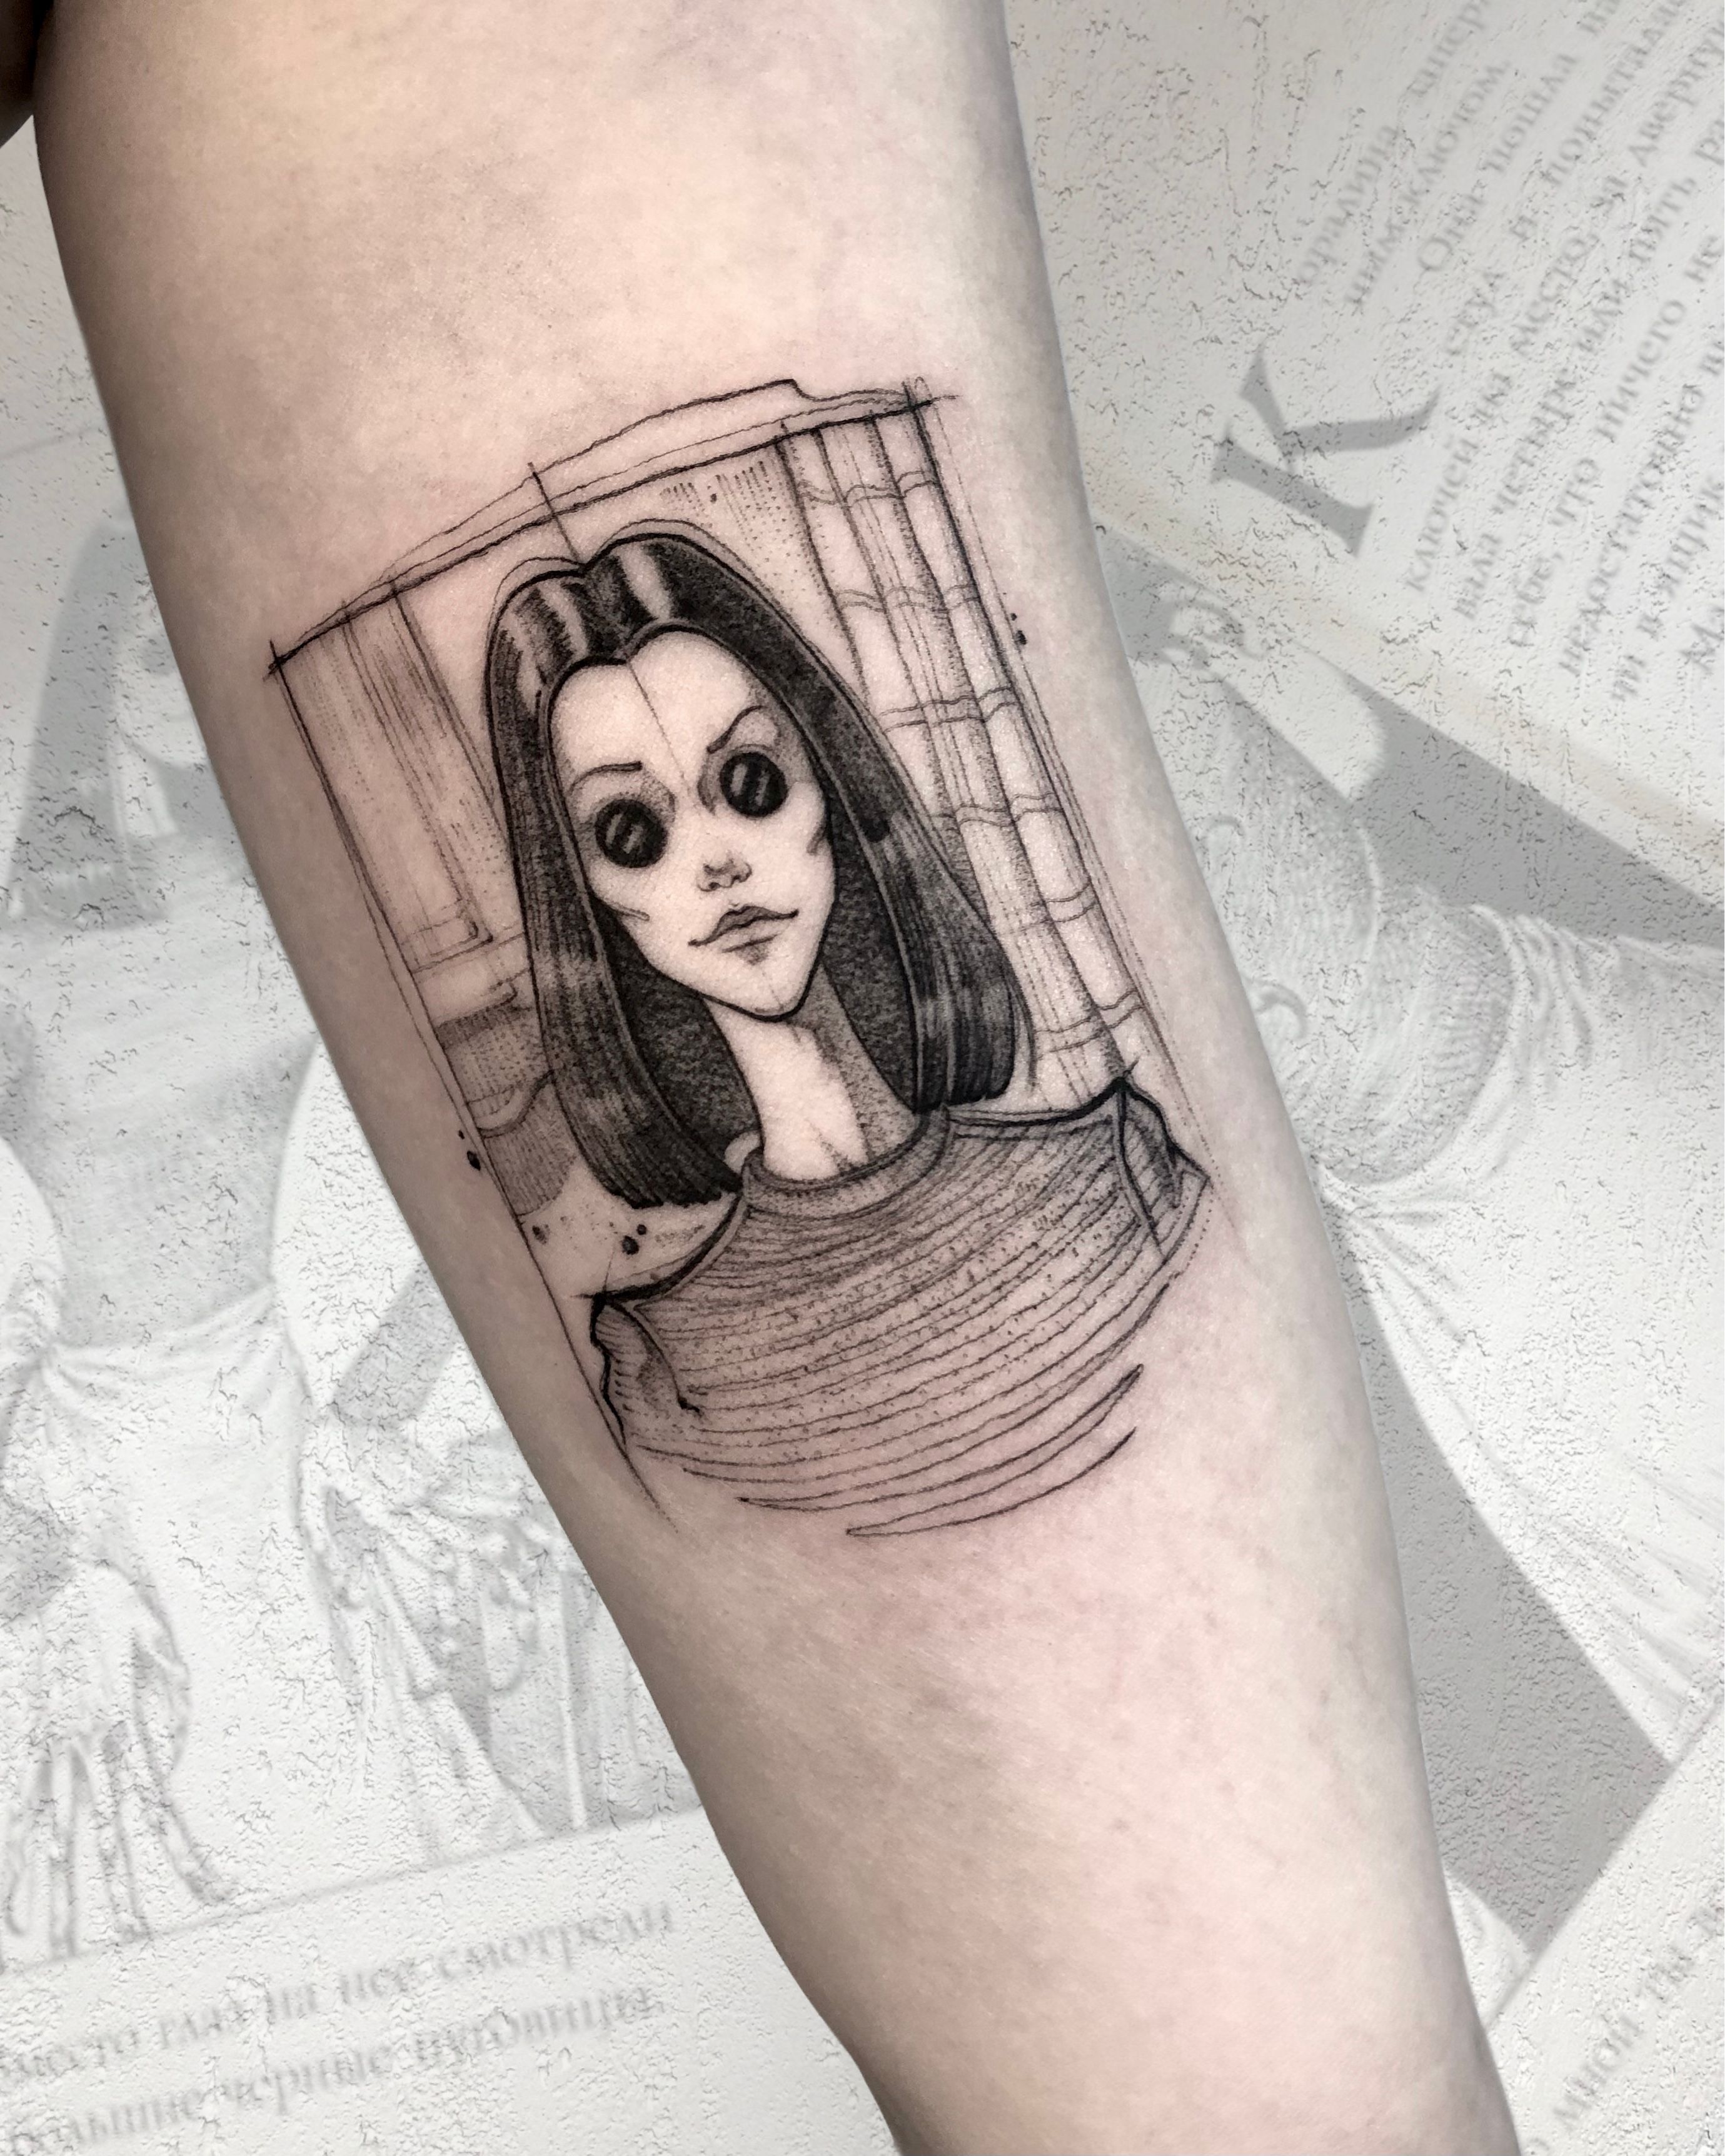 Man gets Wednesday Addams tattoo that looks more like Gollum  Kidspot